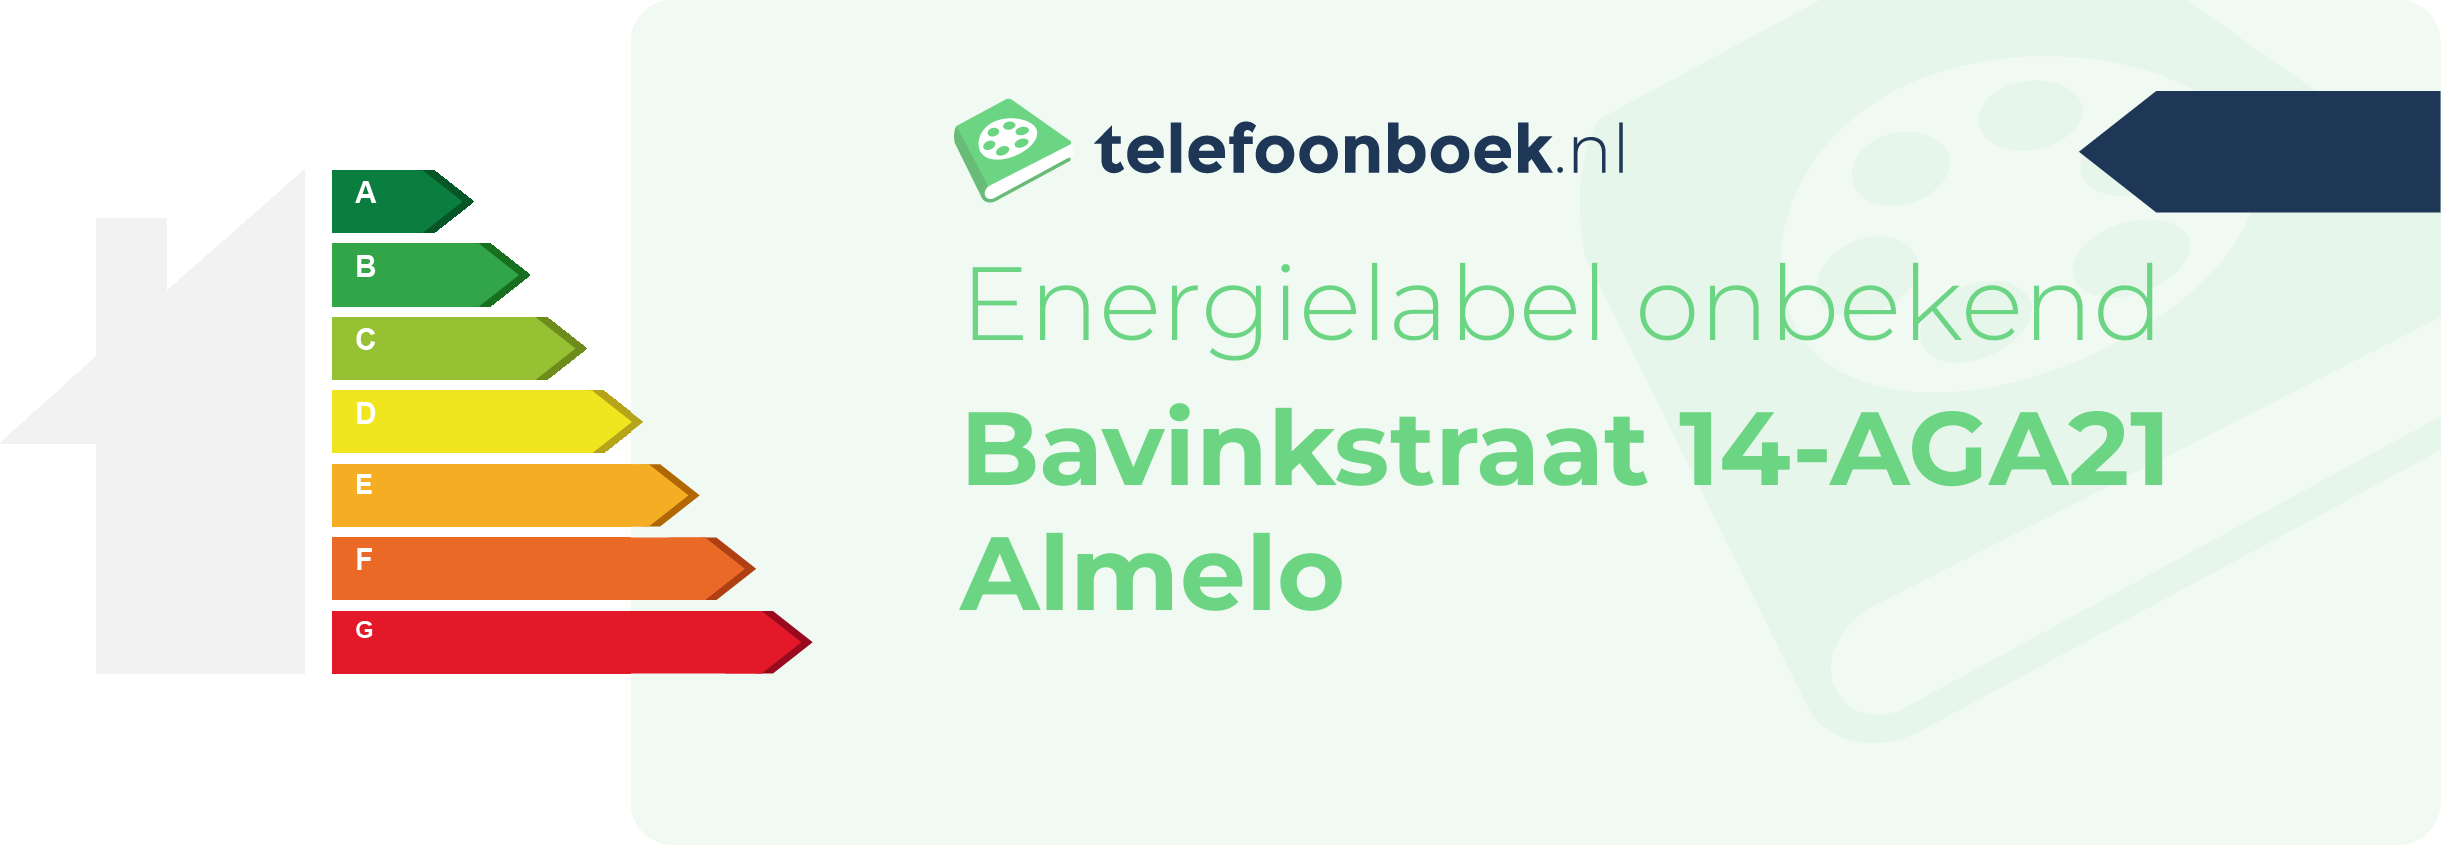 Energielabel Bavinkstraat 14-AGA21 Almelo